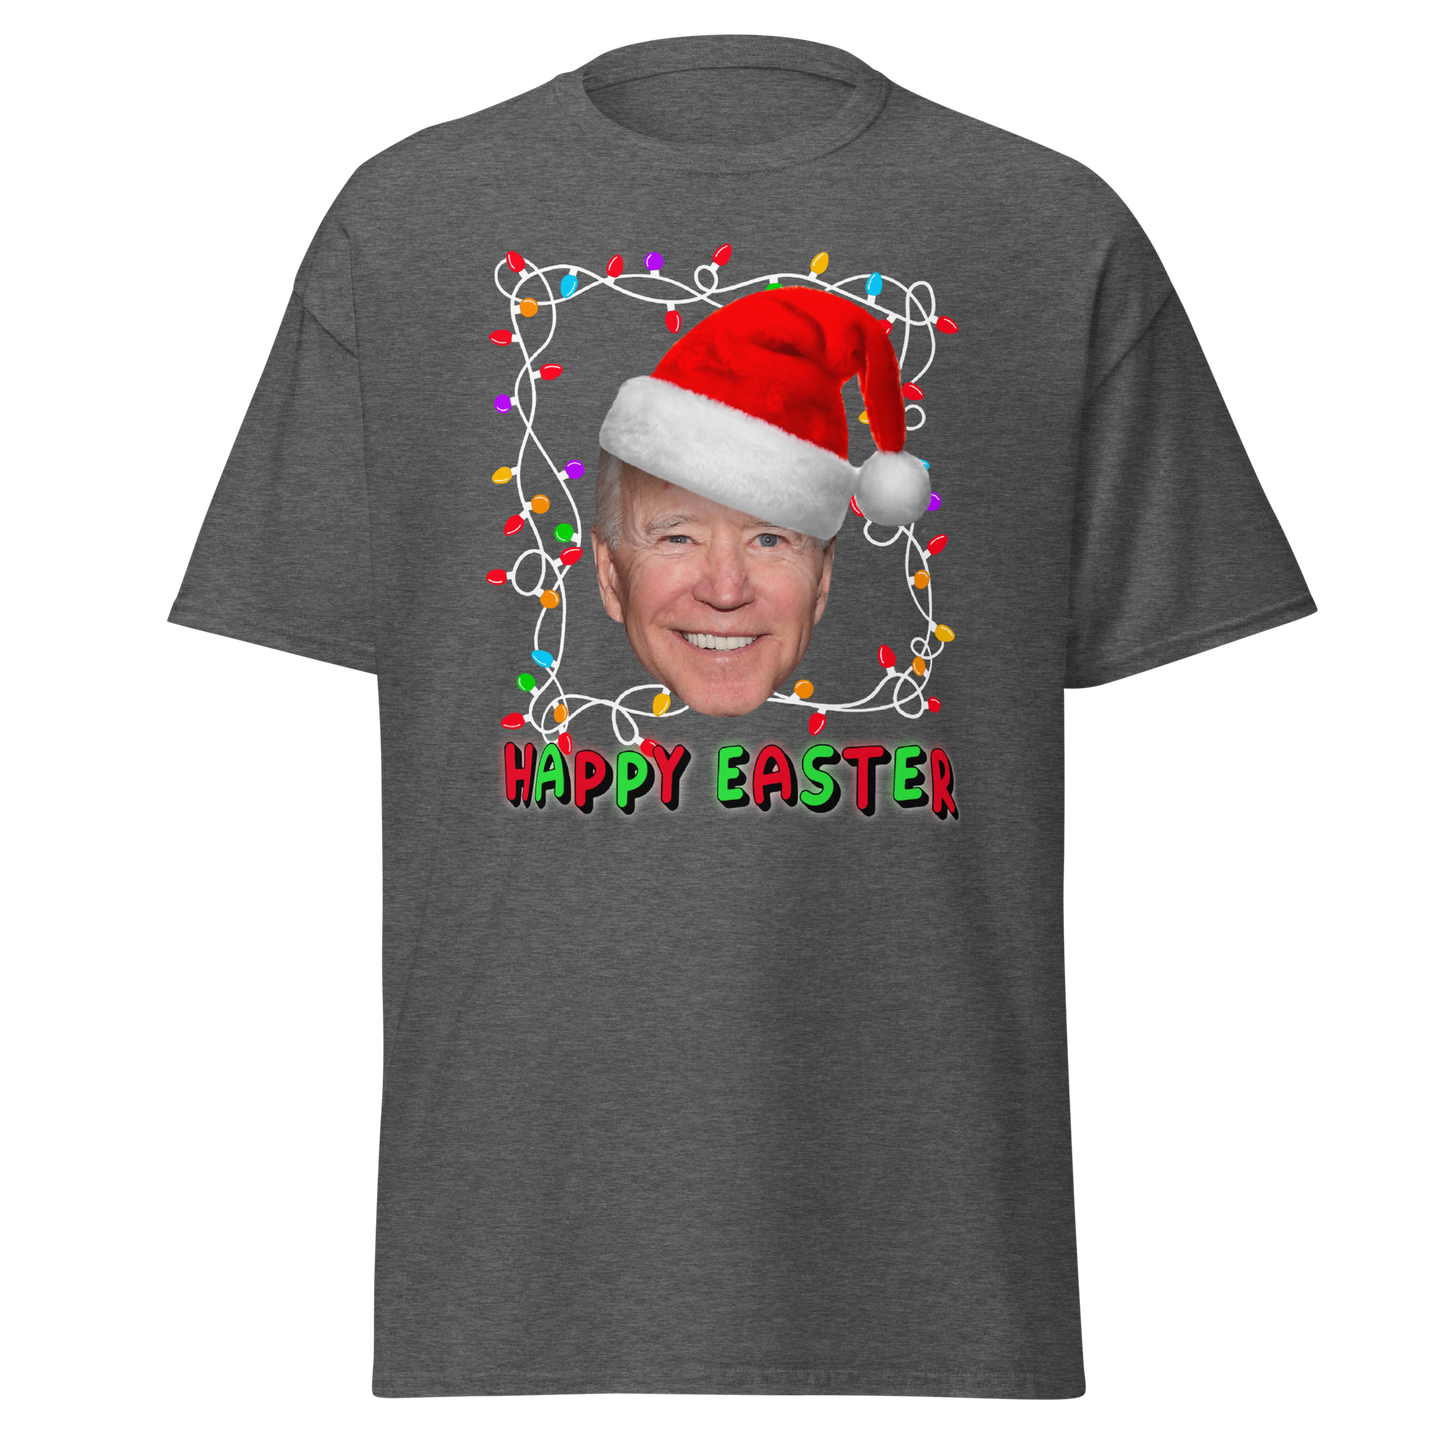 Joe's Christmas T-Shirt